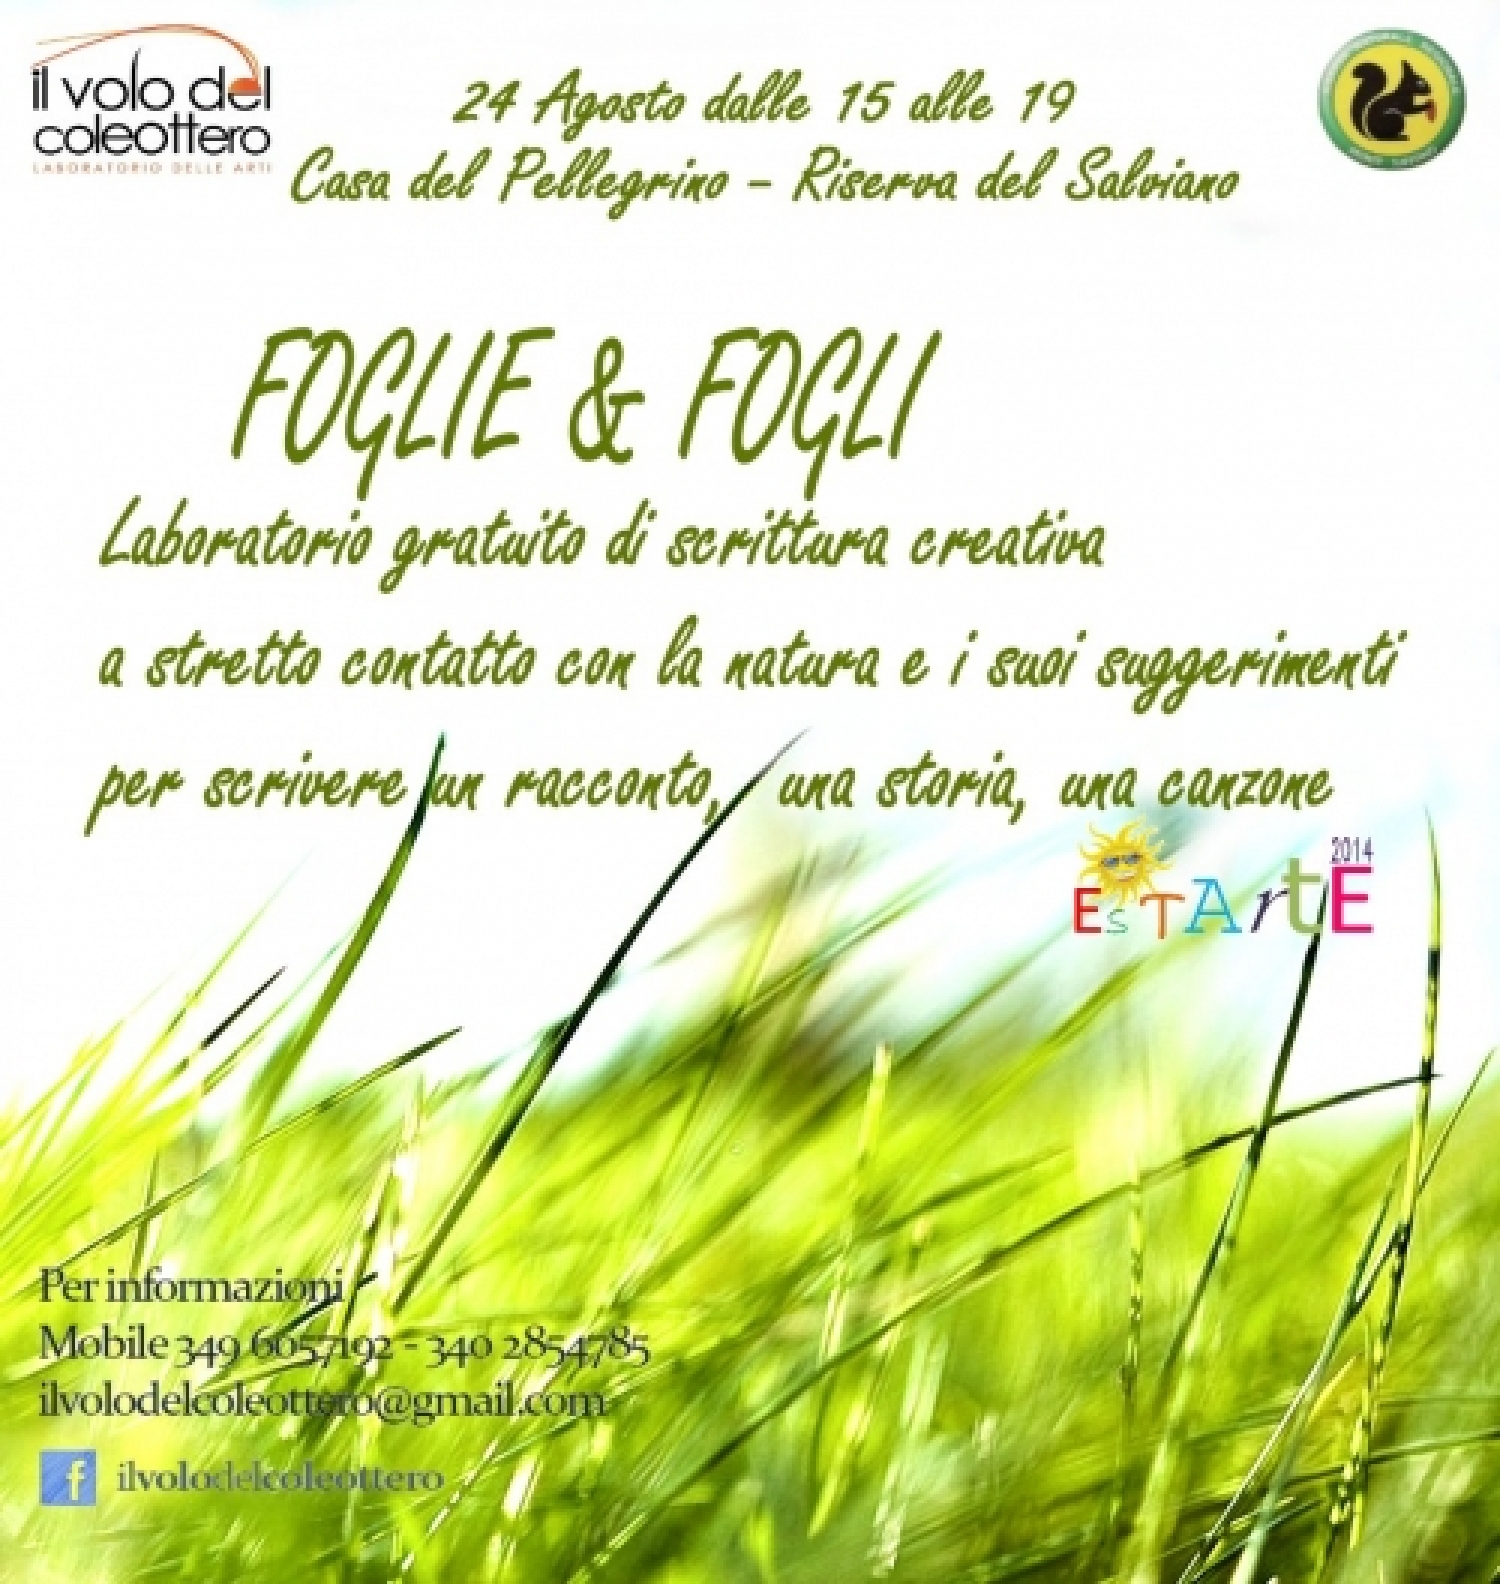 Foglie & Fogli - EstArte2014 locandina.jpg